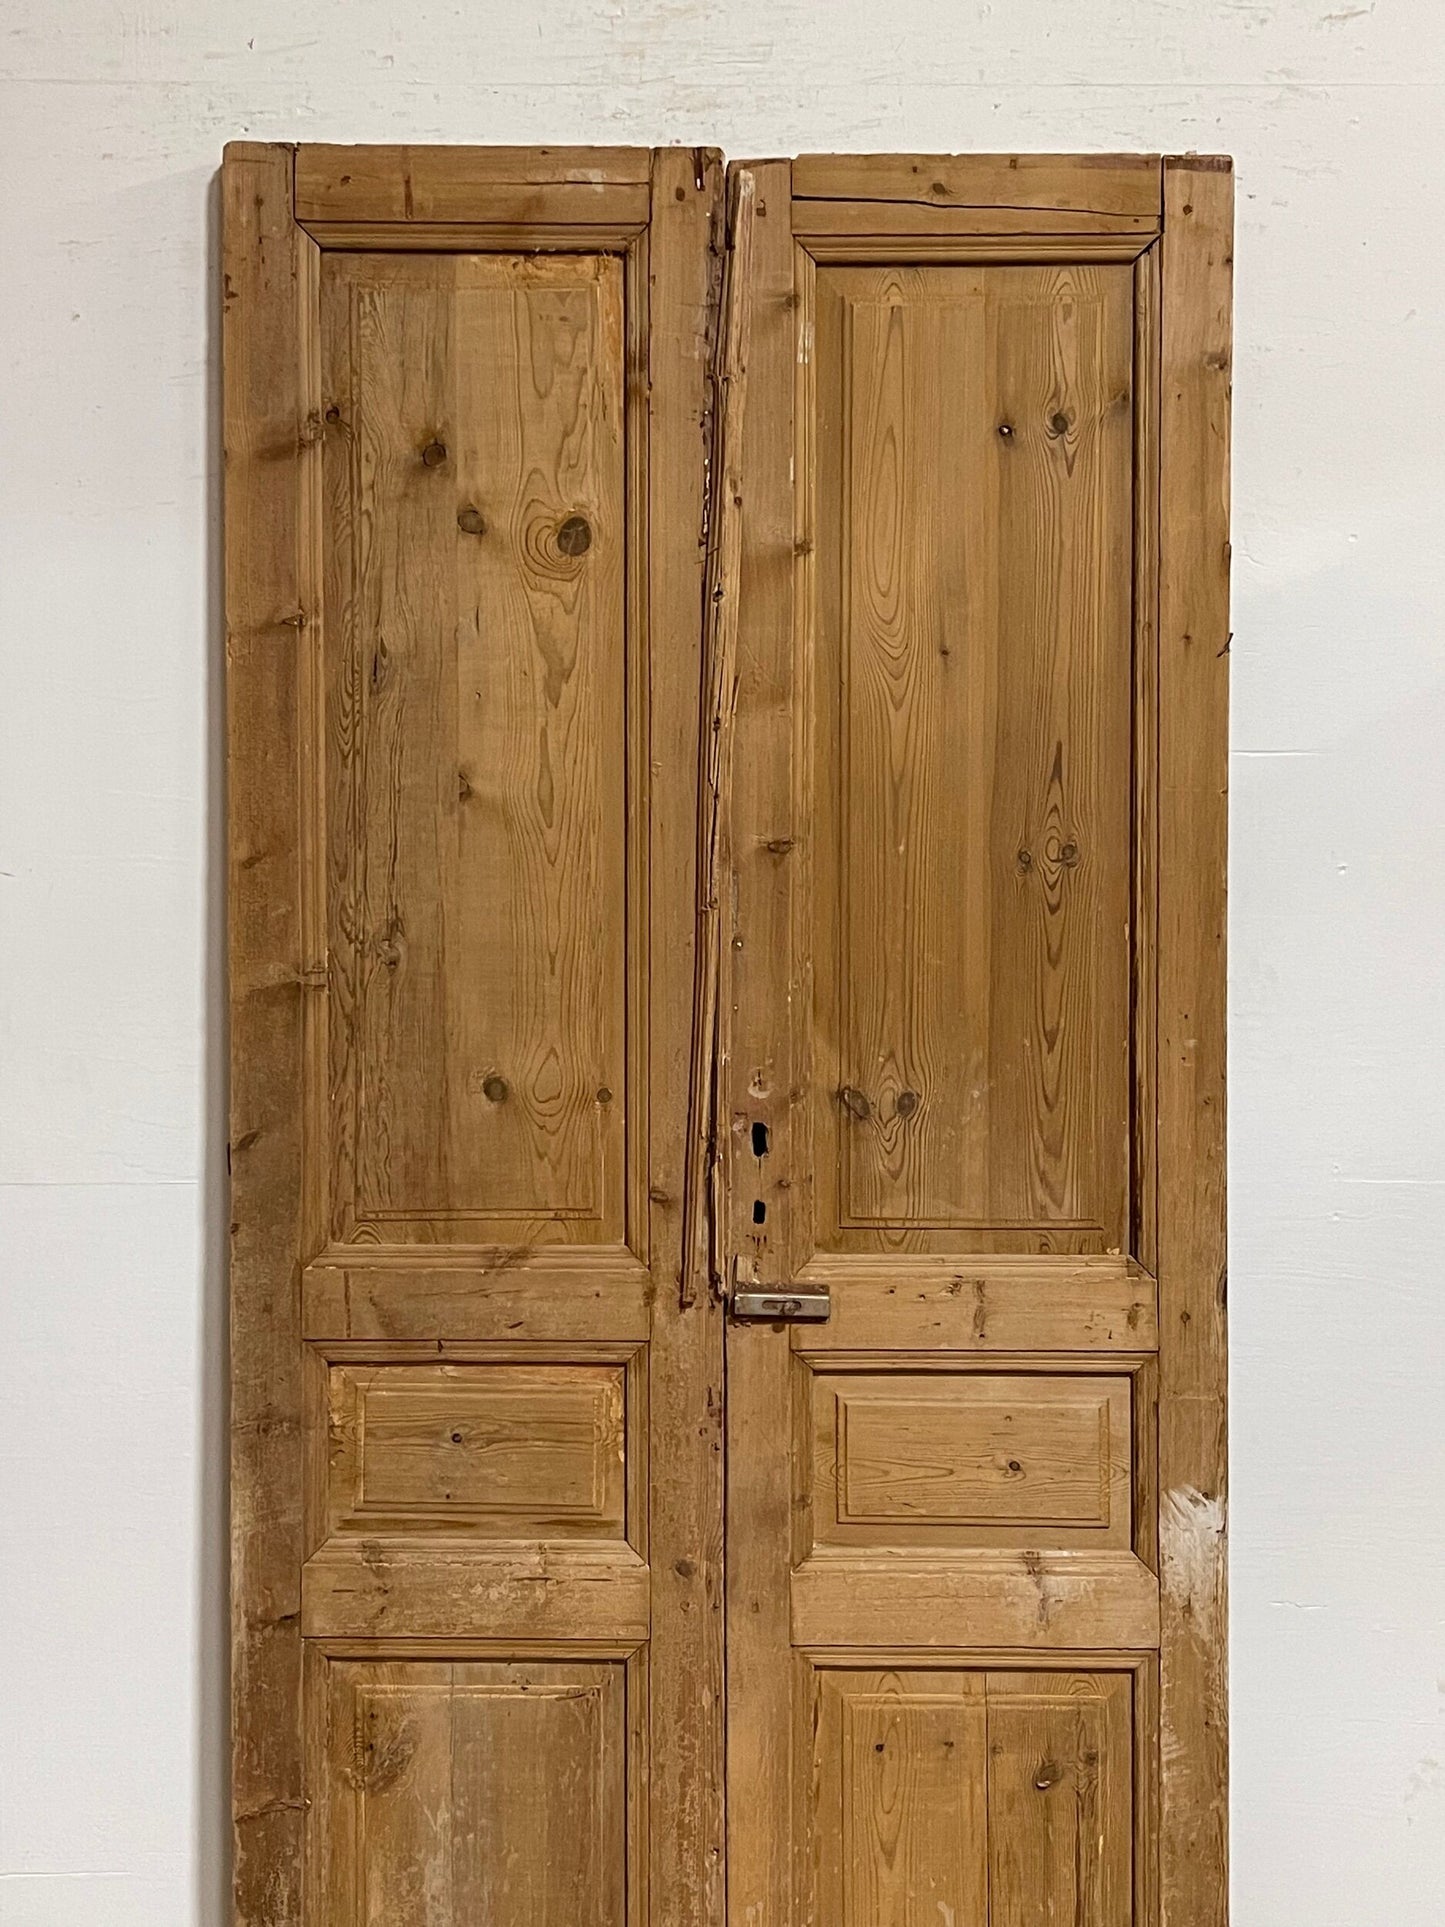 Antique French doors (92x43) H0158s